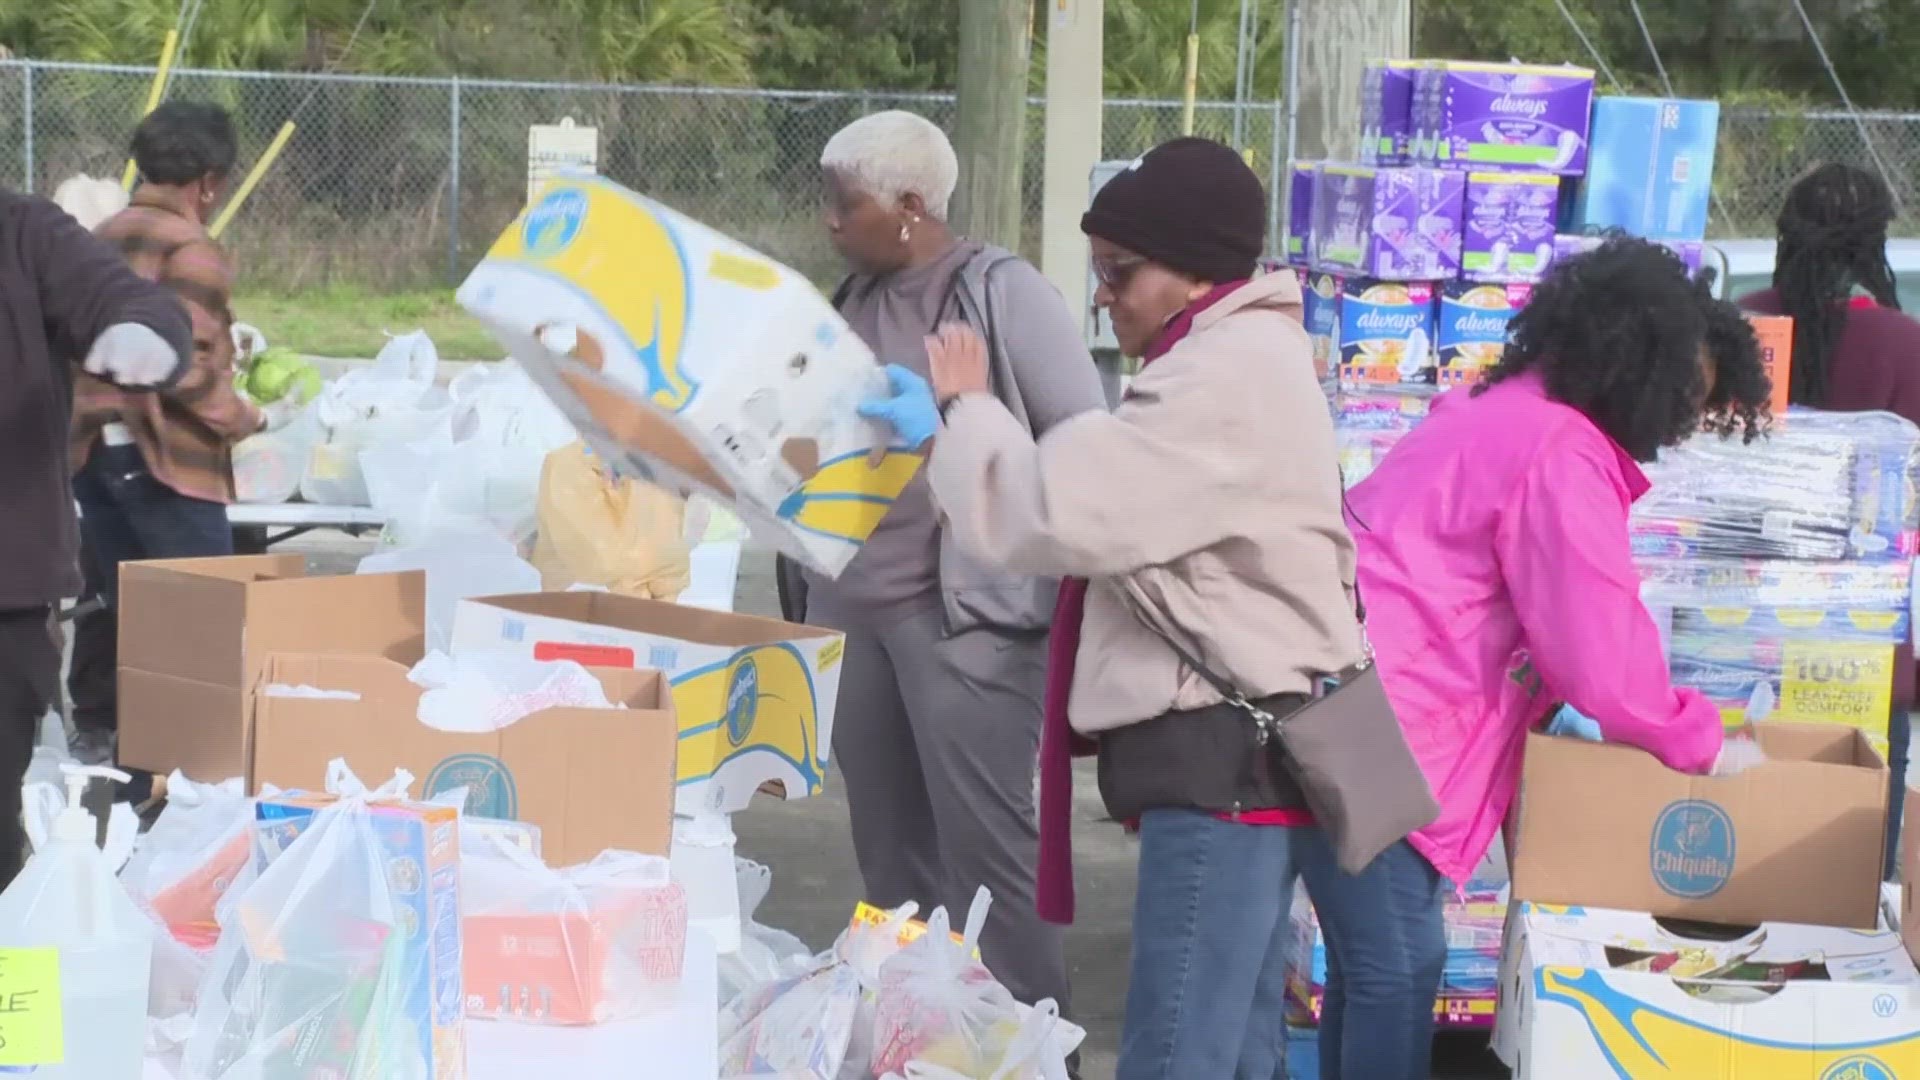 Officials say it's the city's 'biggest volunteer effort' in Jacksonville history.